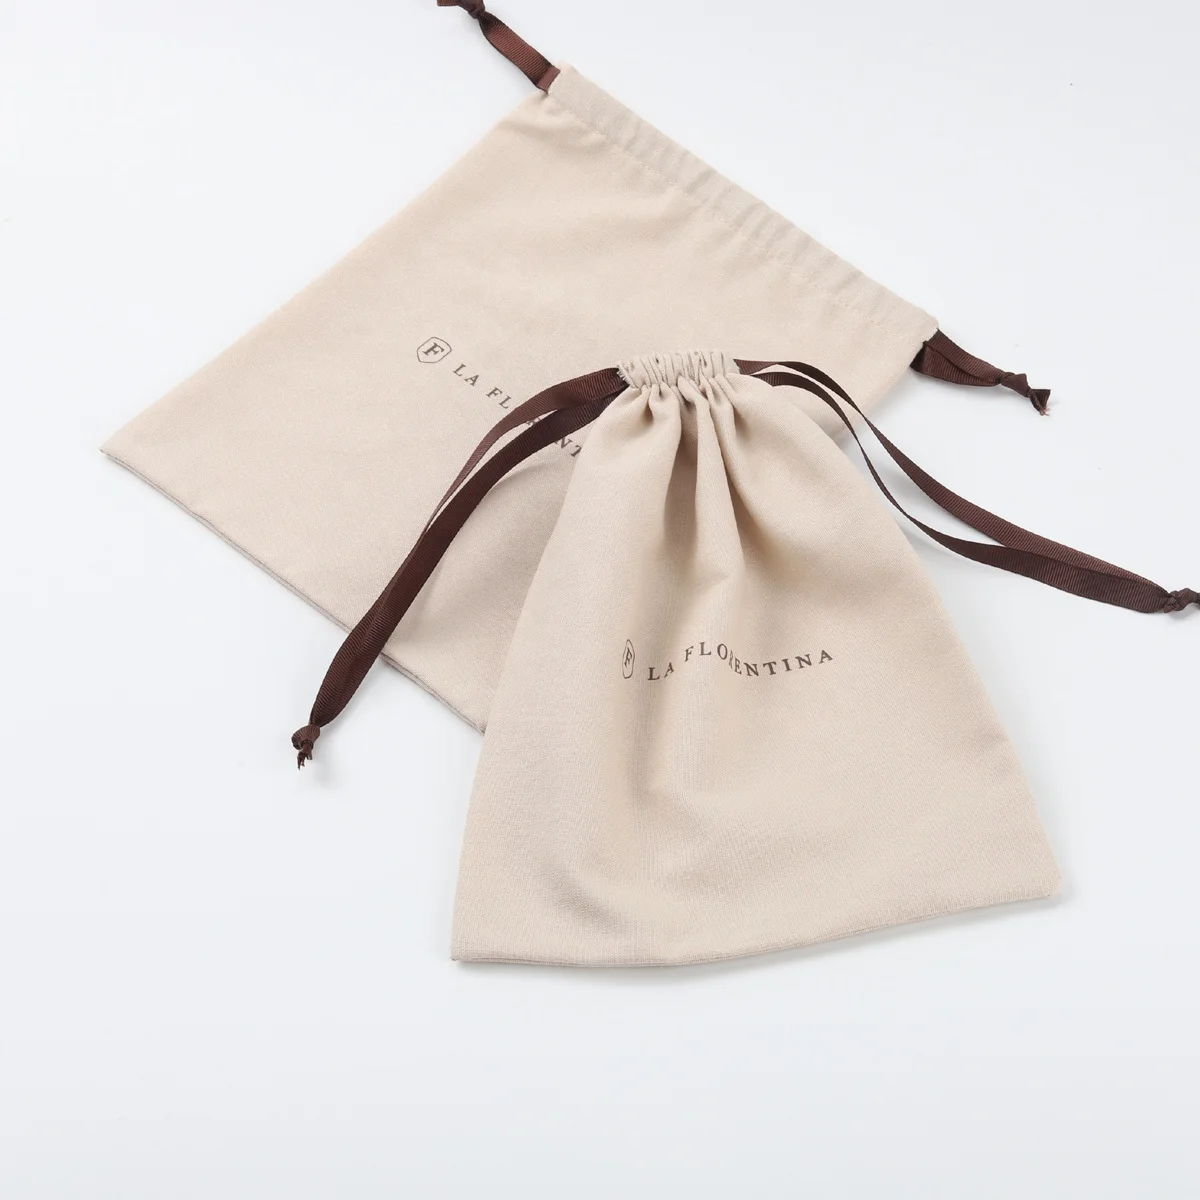 Hot Sale Coffee Cotton Linen Cosmetic Drawstring Gift Bag Organic Cotton Muslin Makeup Pouch